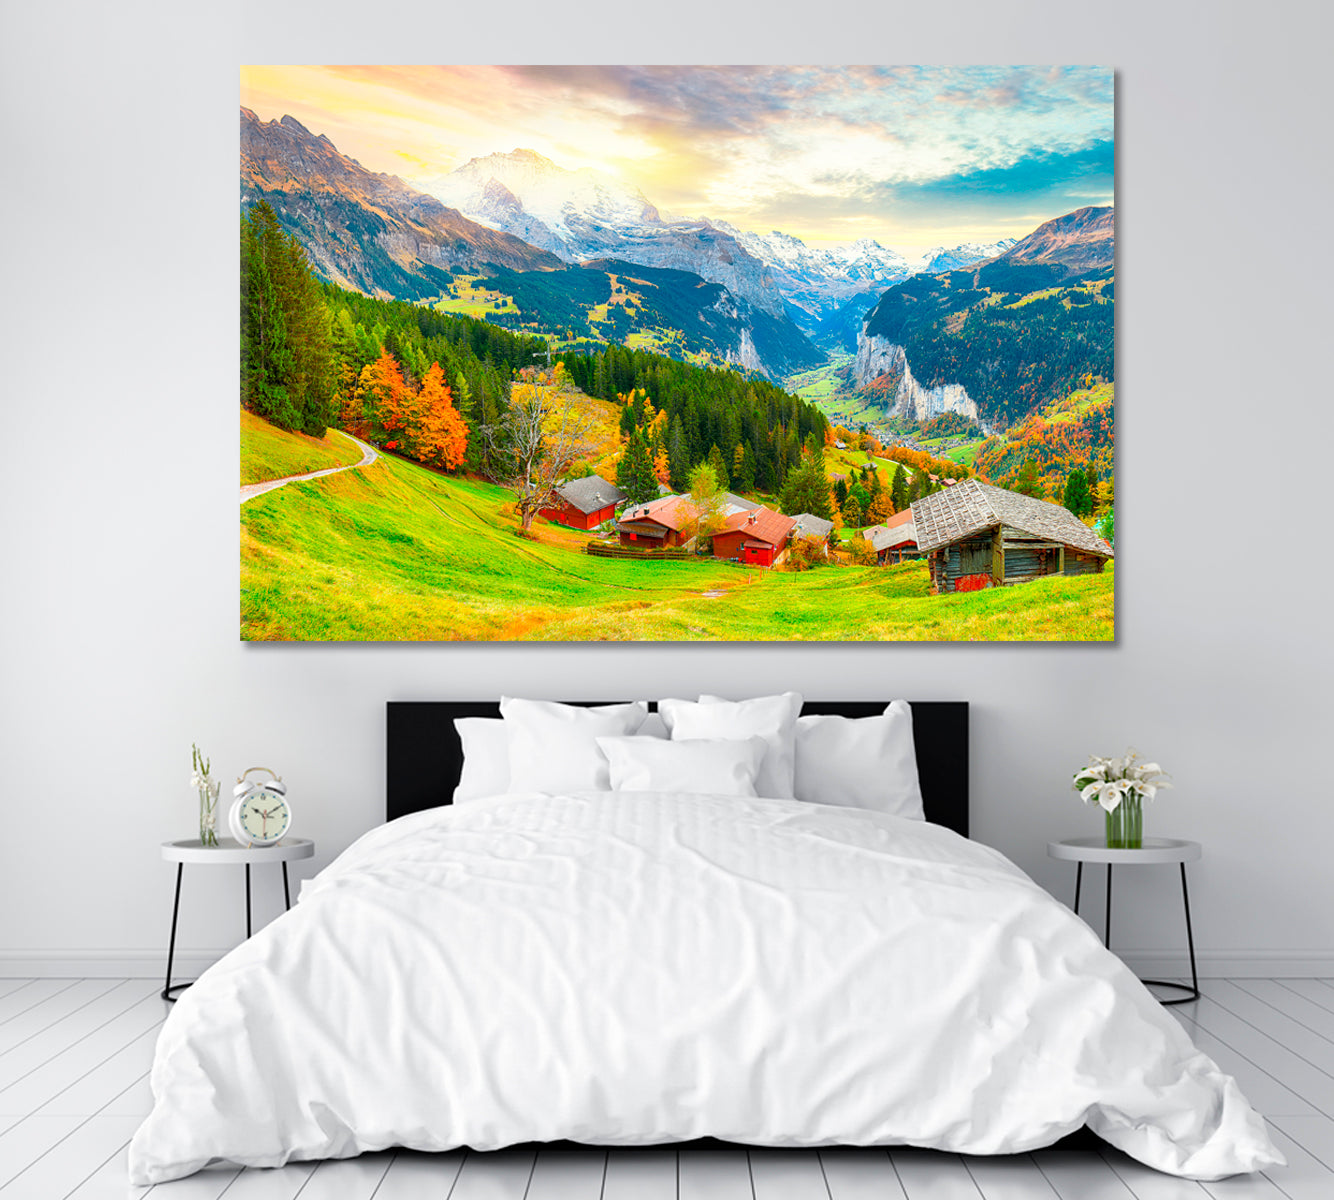 Lauterbrunnen Valley with Jungfrau Mountain Switzerland Canvas Print ArtLexy 1 Panel 24"x16" inches 